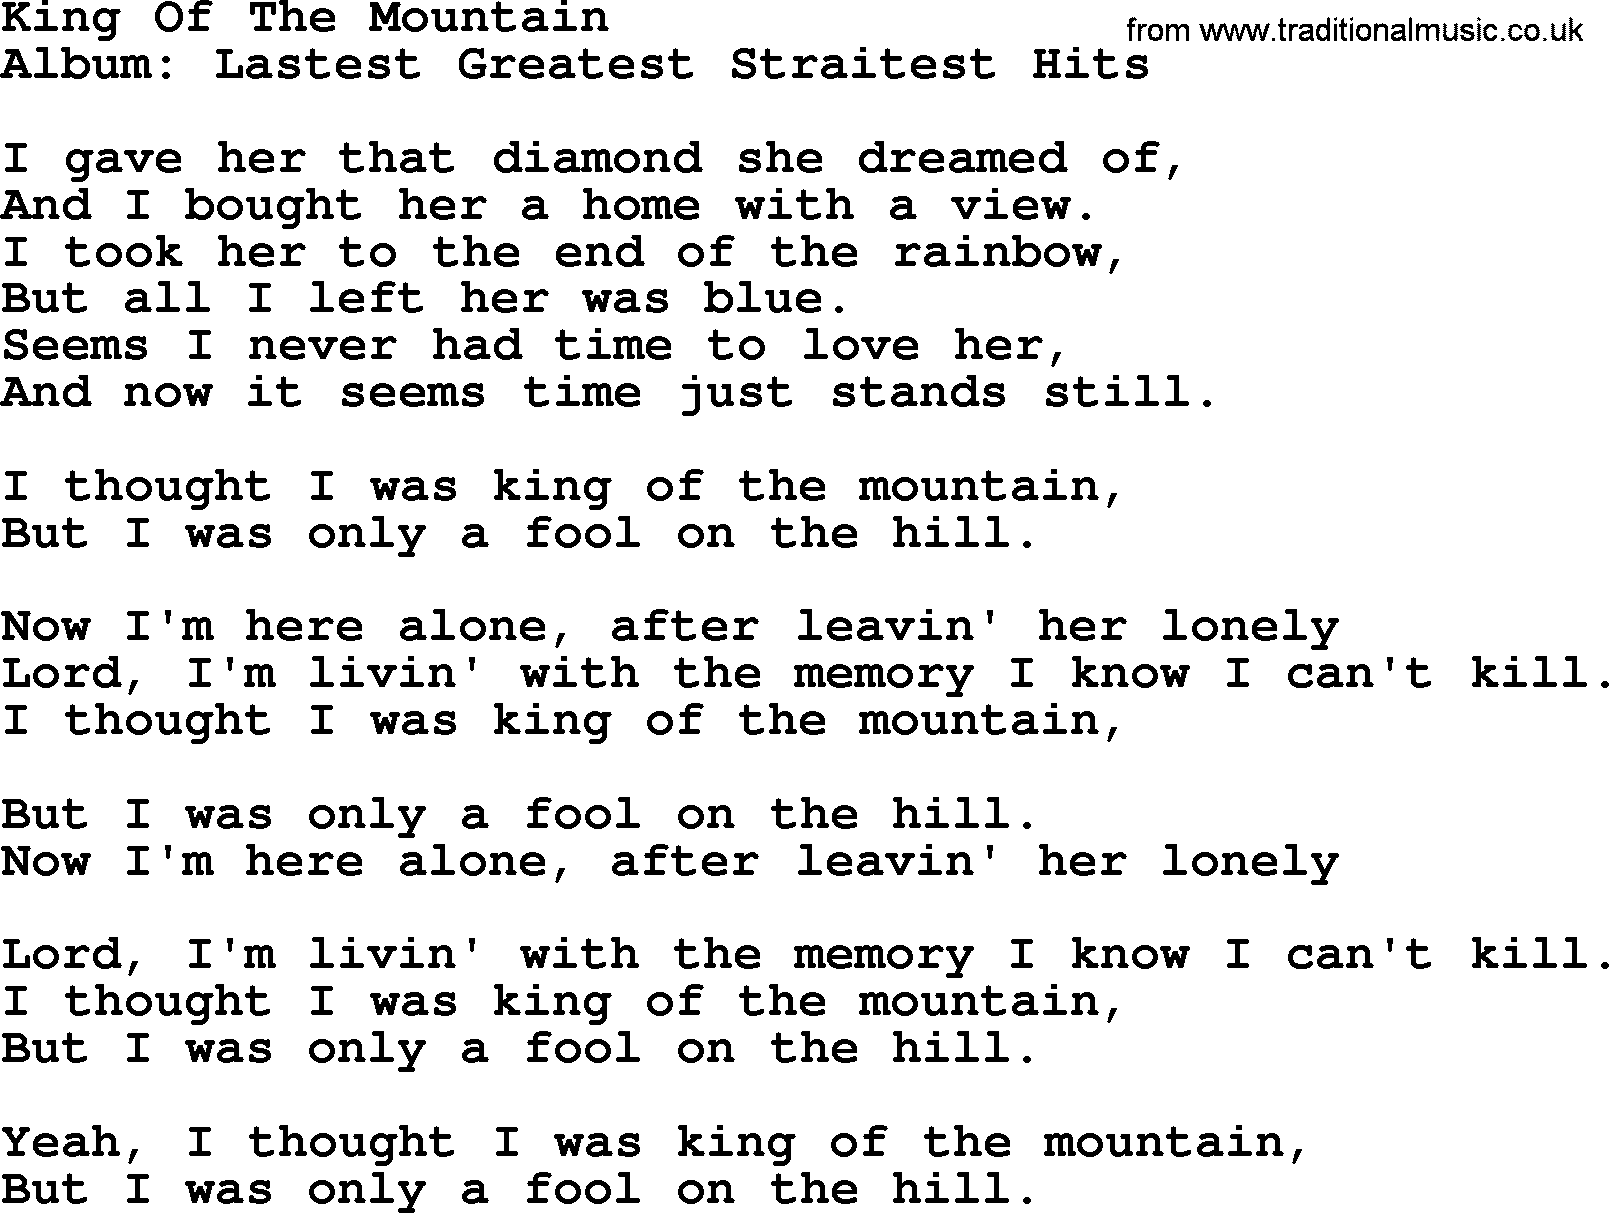 George Strait song: King Of The Mountain, lyrics